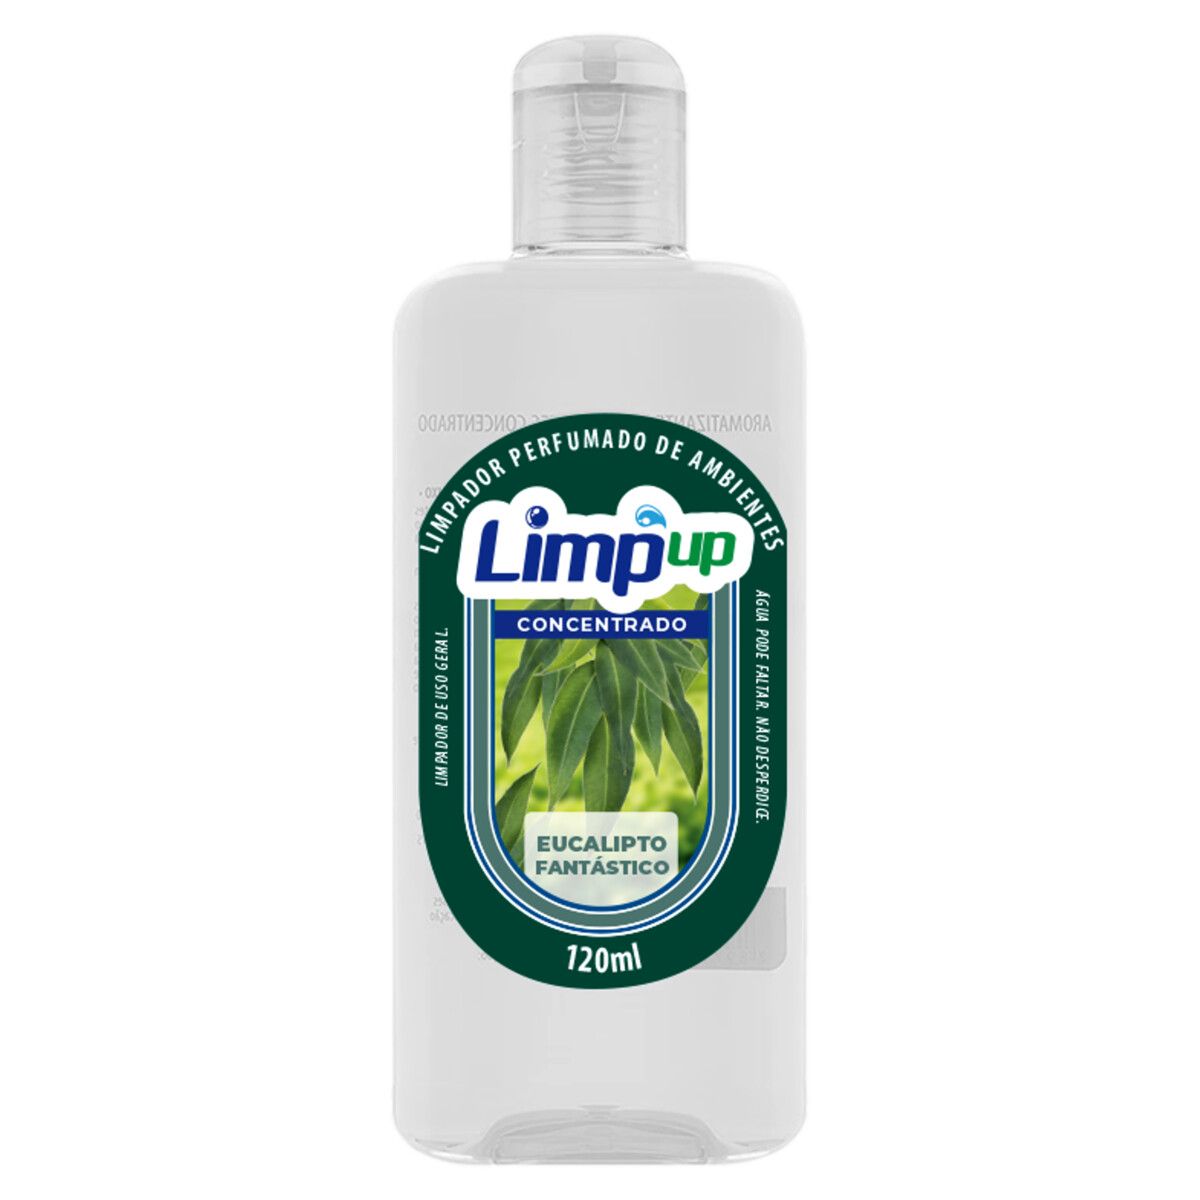 Limpador Perfumado Concentrado Limp Up Eucalipto Fantástico 120ml image number 0